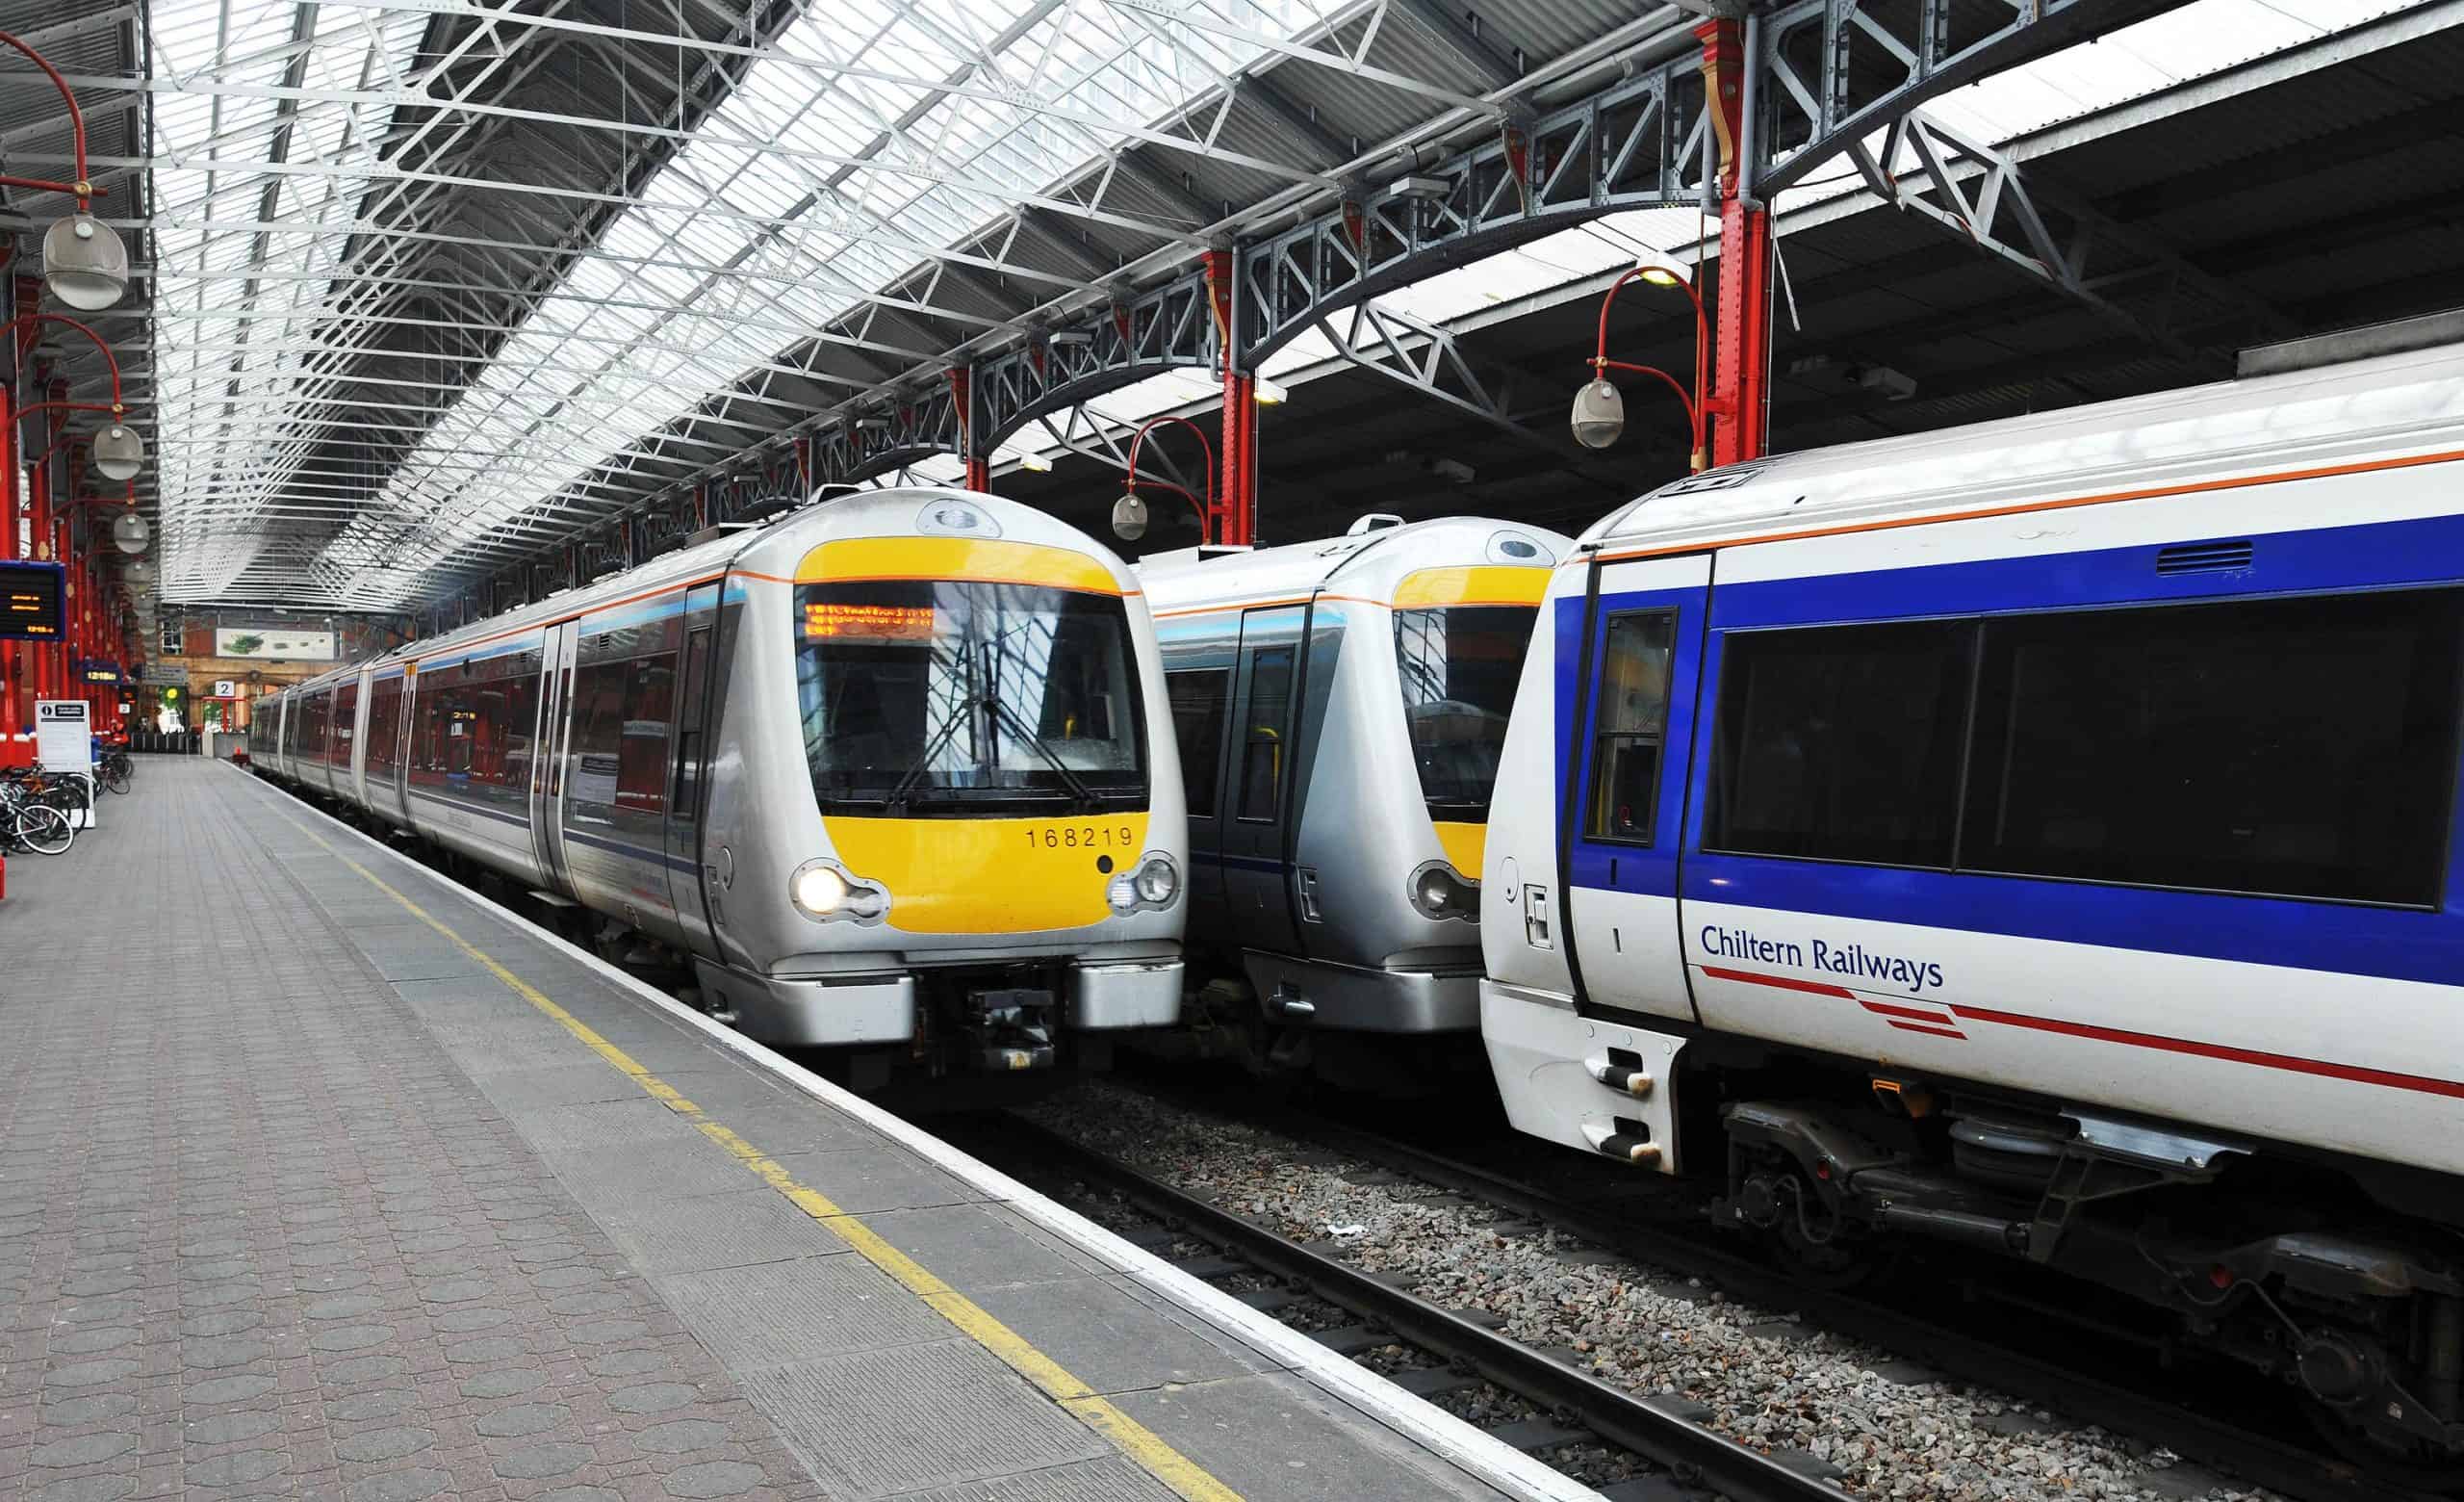 LATEST: London Marylebone railway station closed